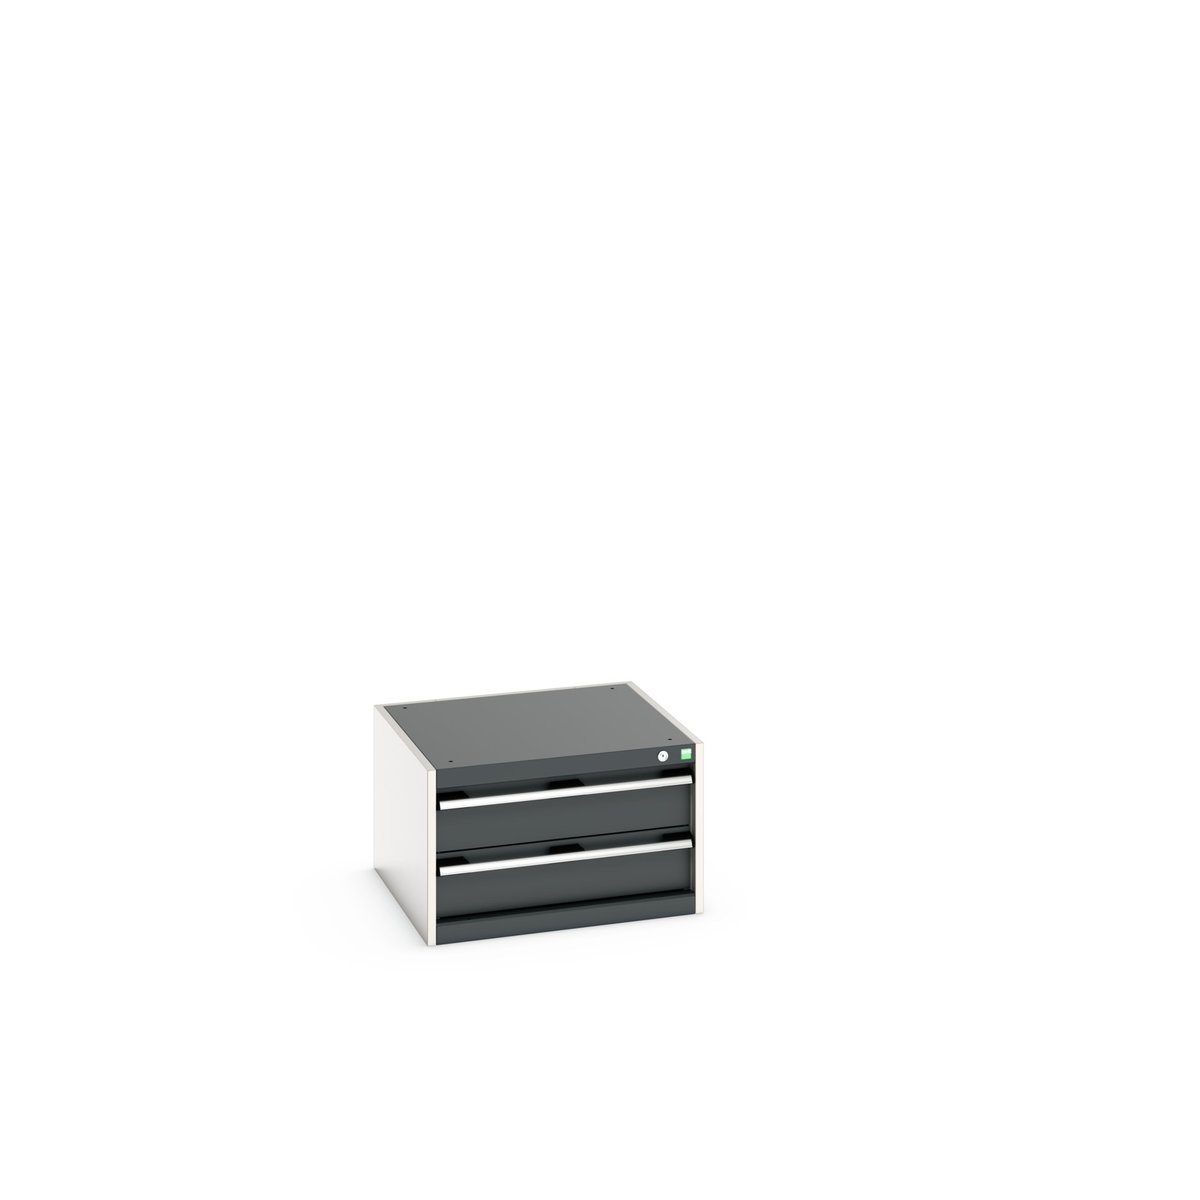 40019005. - cubio drawer cabinet